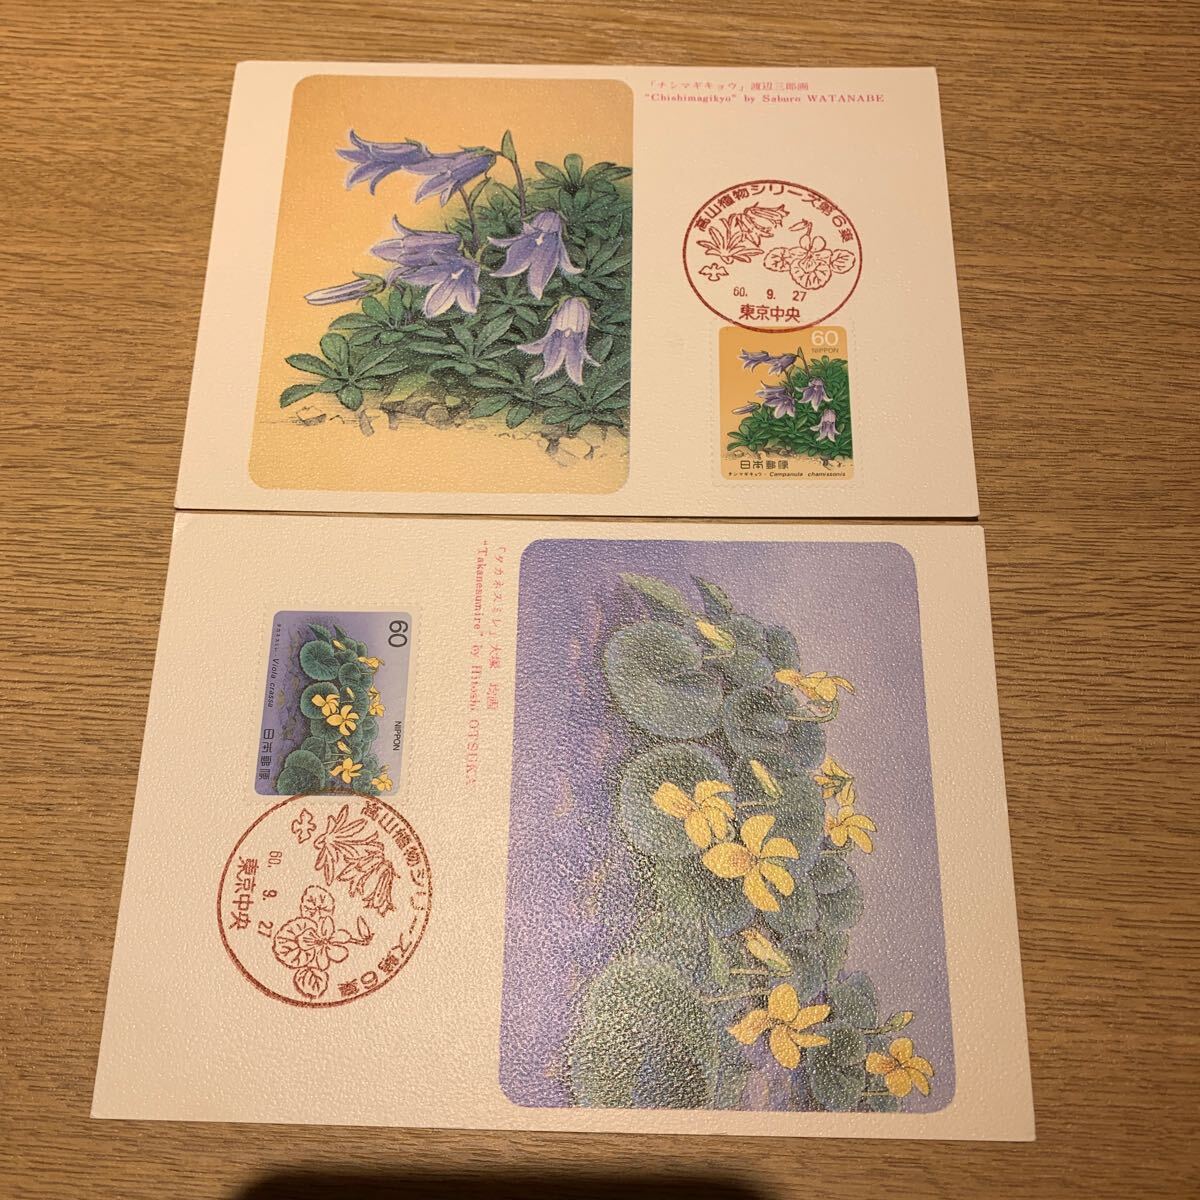  Maximum card Alpine plants series mail stamp no. 6 compilation Showa era 60 year issue 2 sheets summarize 